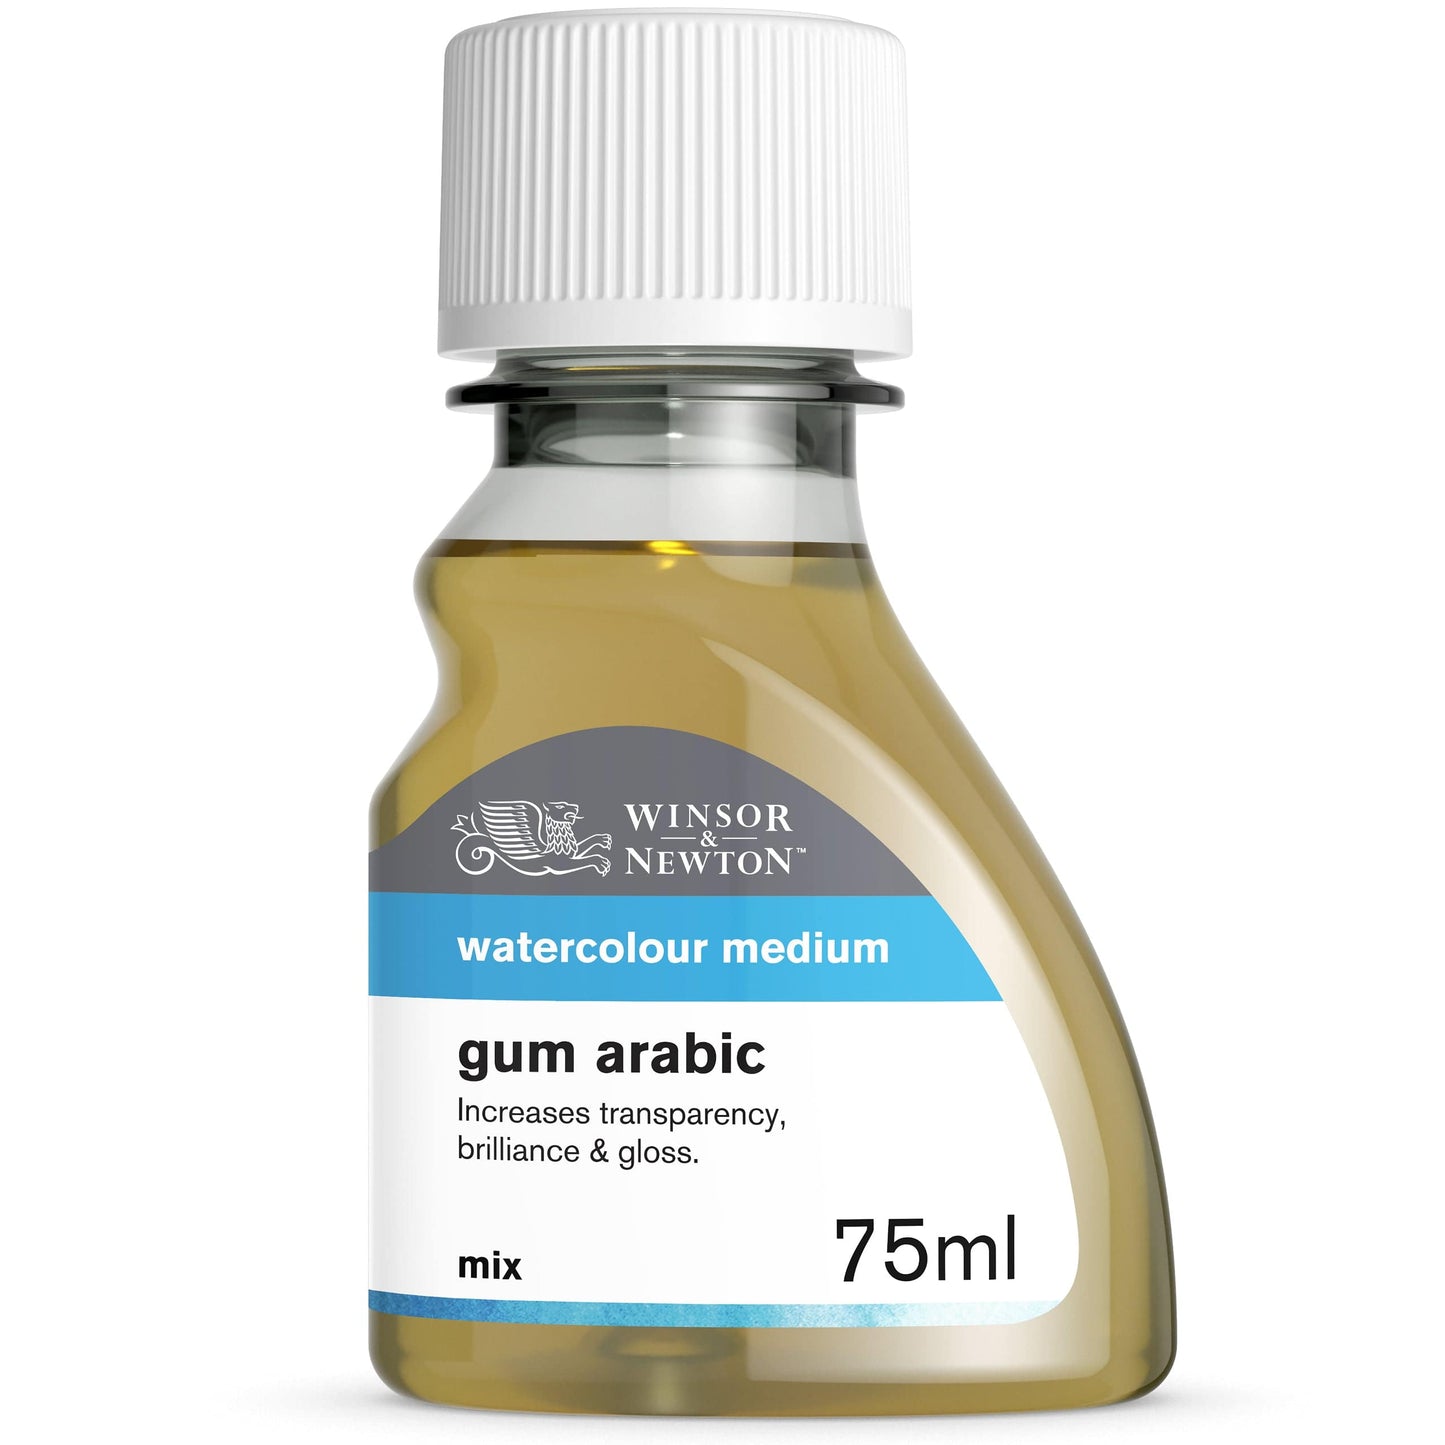 Winsor & Newton Watercolour Medium Winsor & Newton - Gum Arabic - 75mL Bottle - Item #3221763